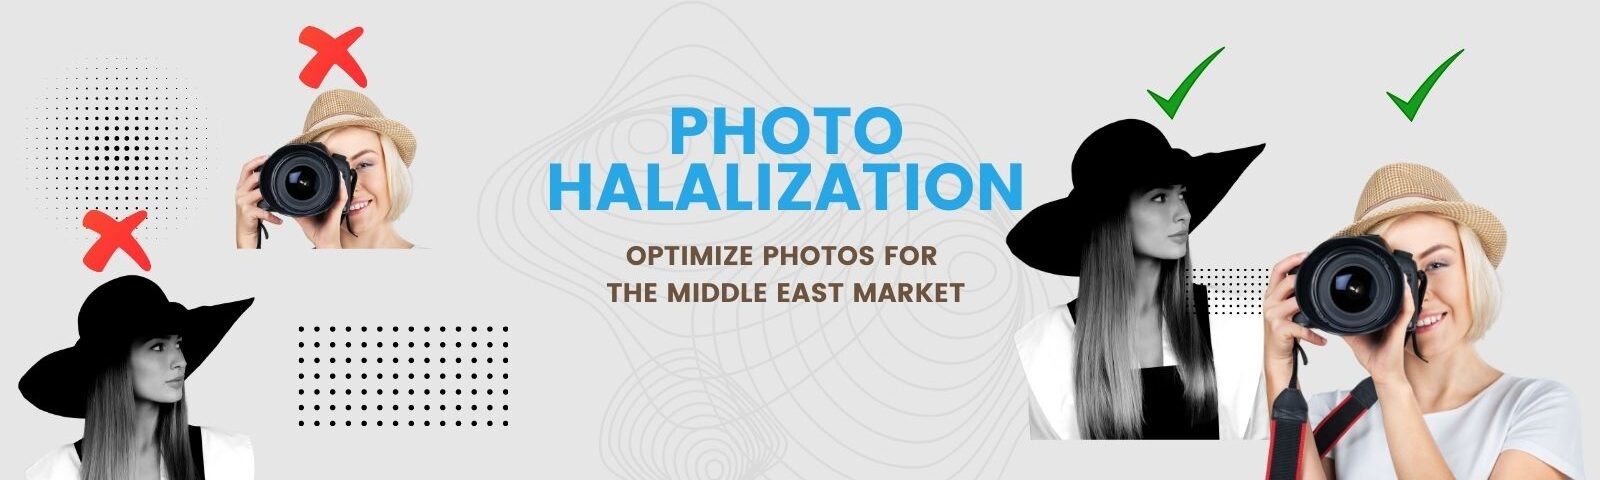 Photo Halalization, optimize photos for the Middle East Market